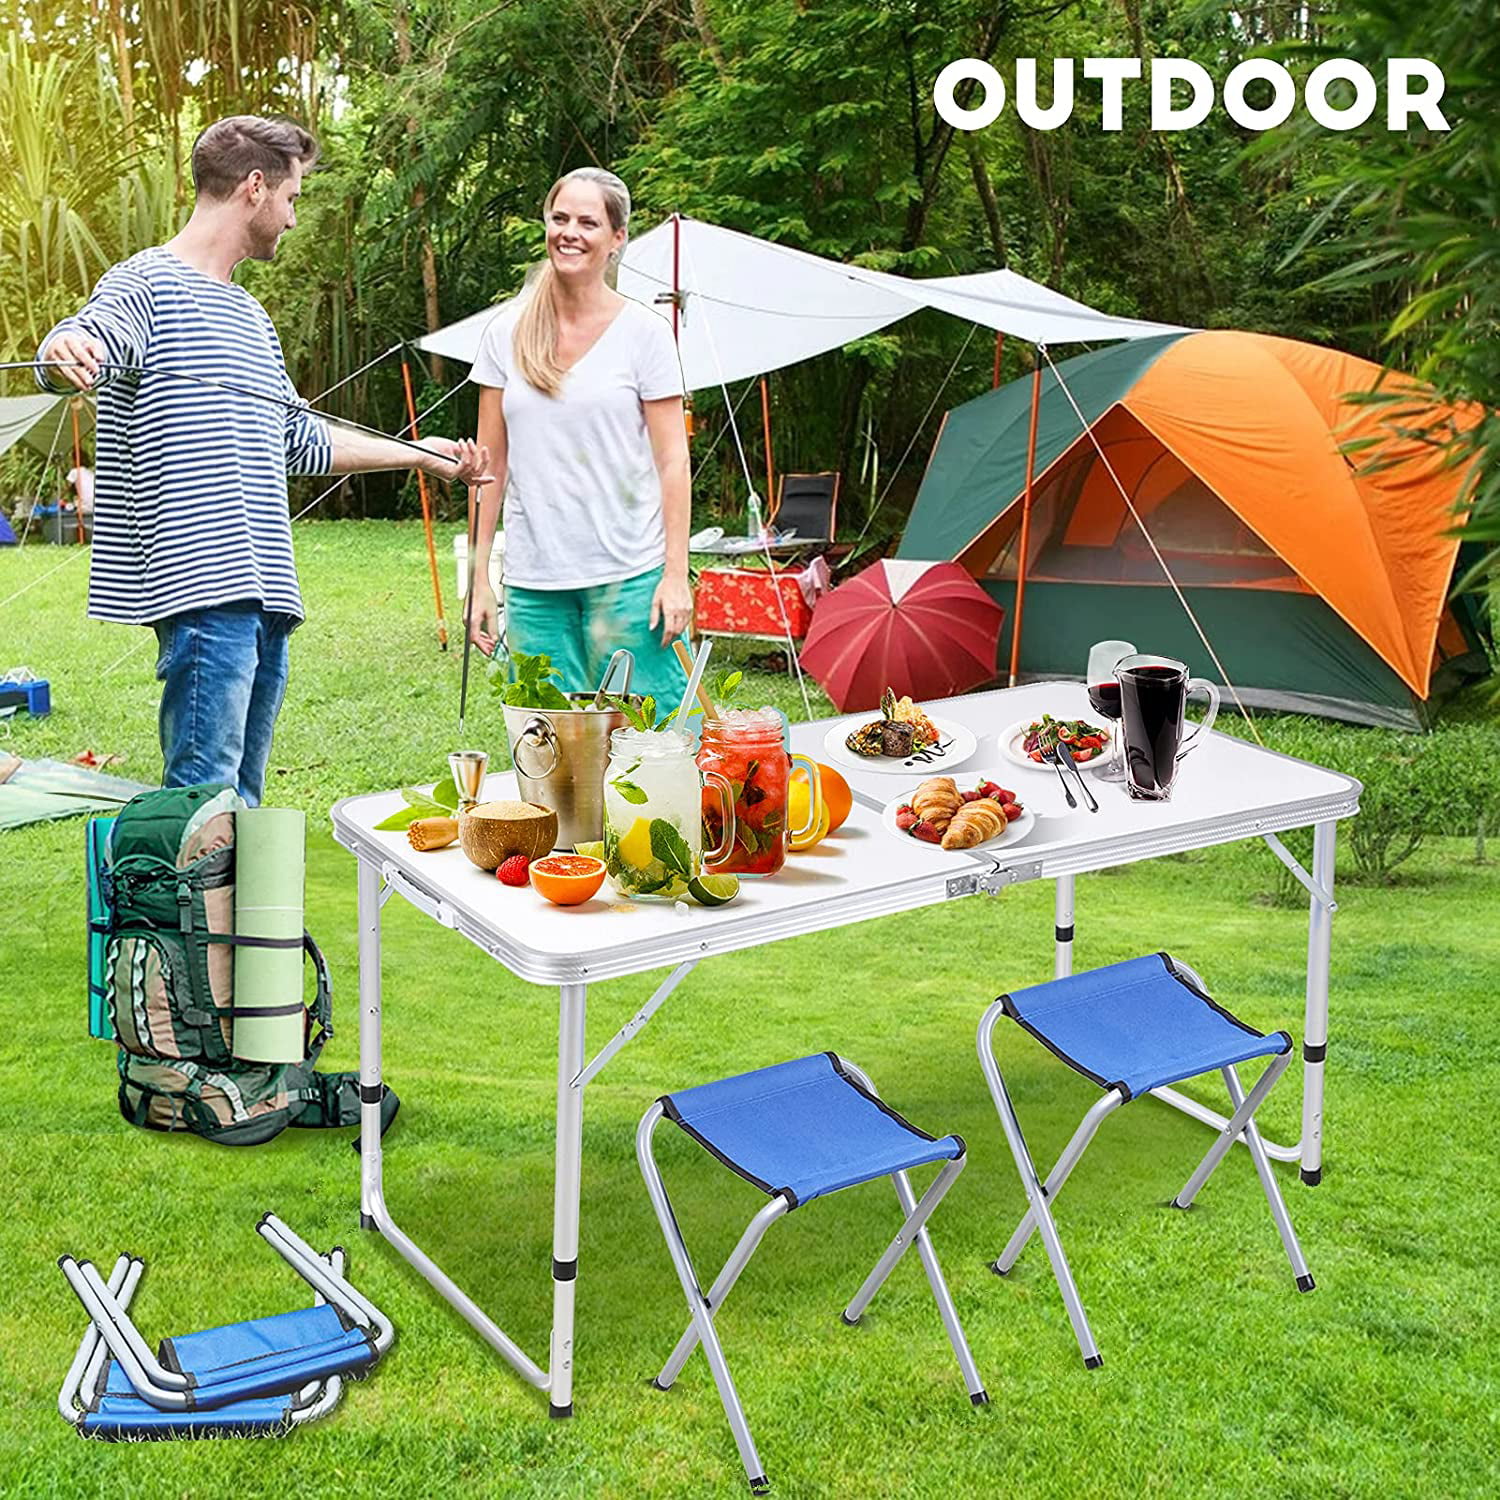 Aluminum Adjustable Camping Folding Table Outdoor Lightweight for Beach Backyar 